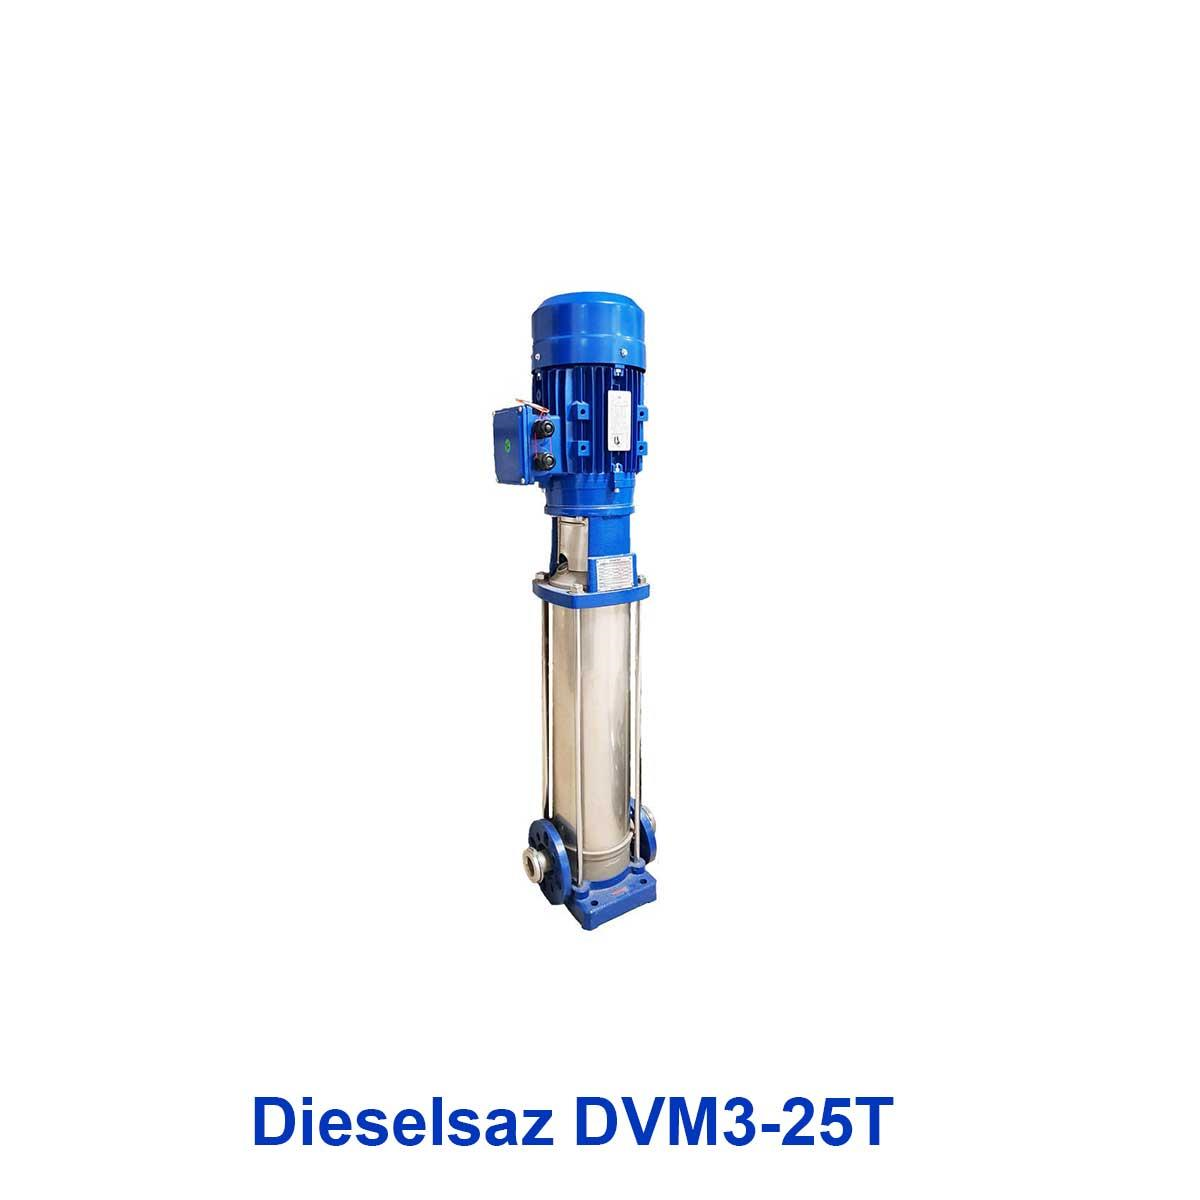 waterpump-vertical-Dieselsaz-DVM3-25T